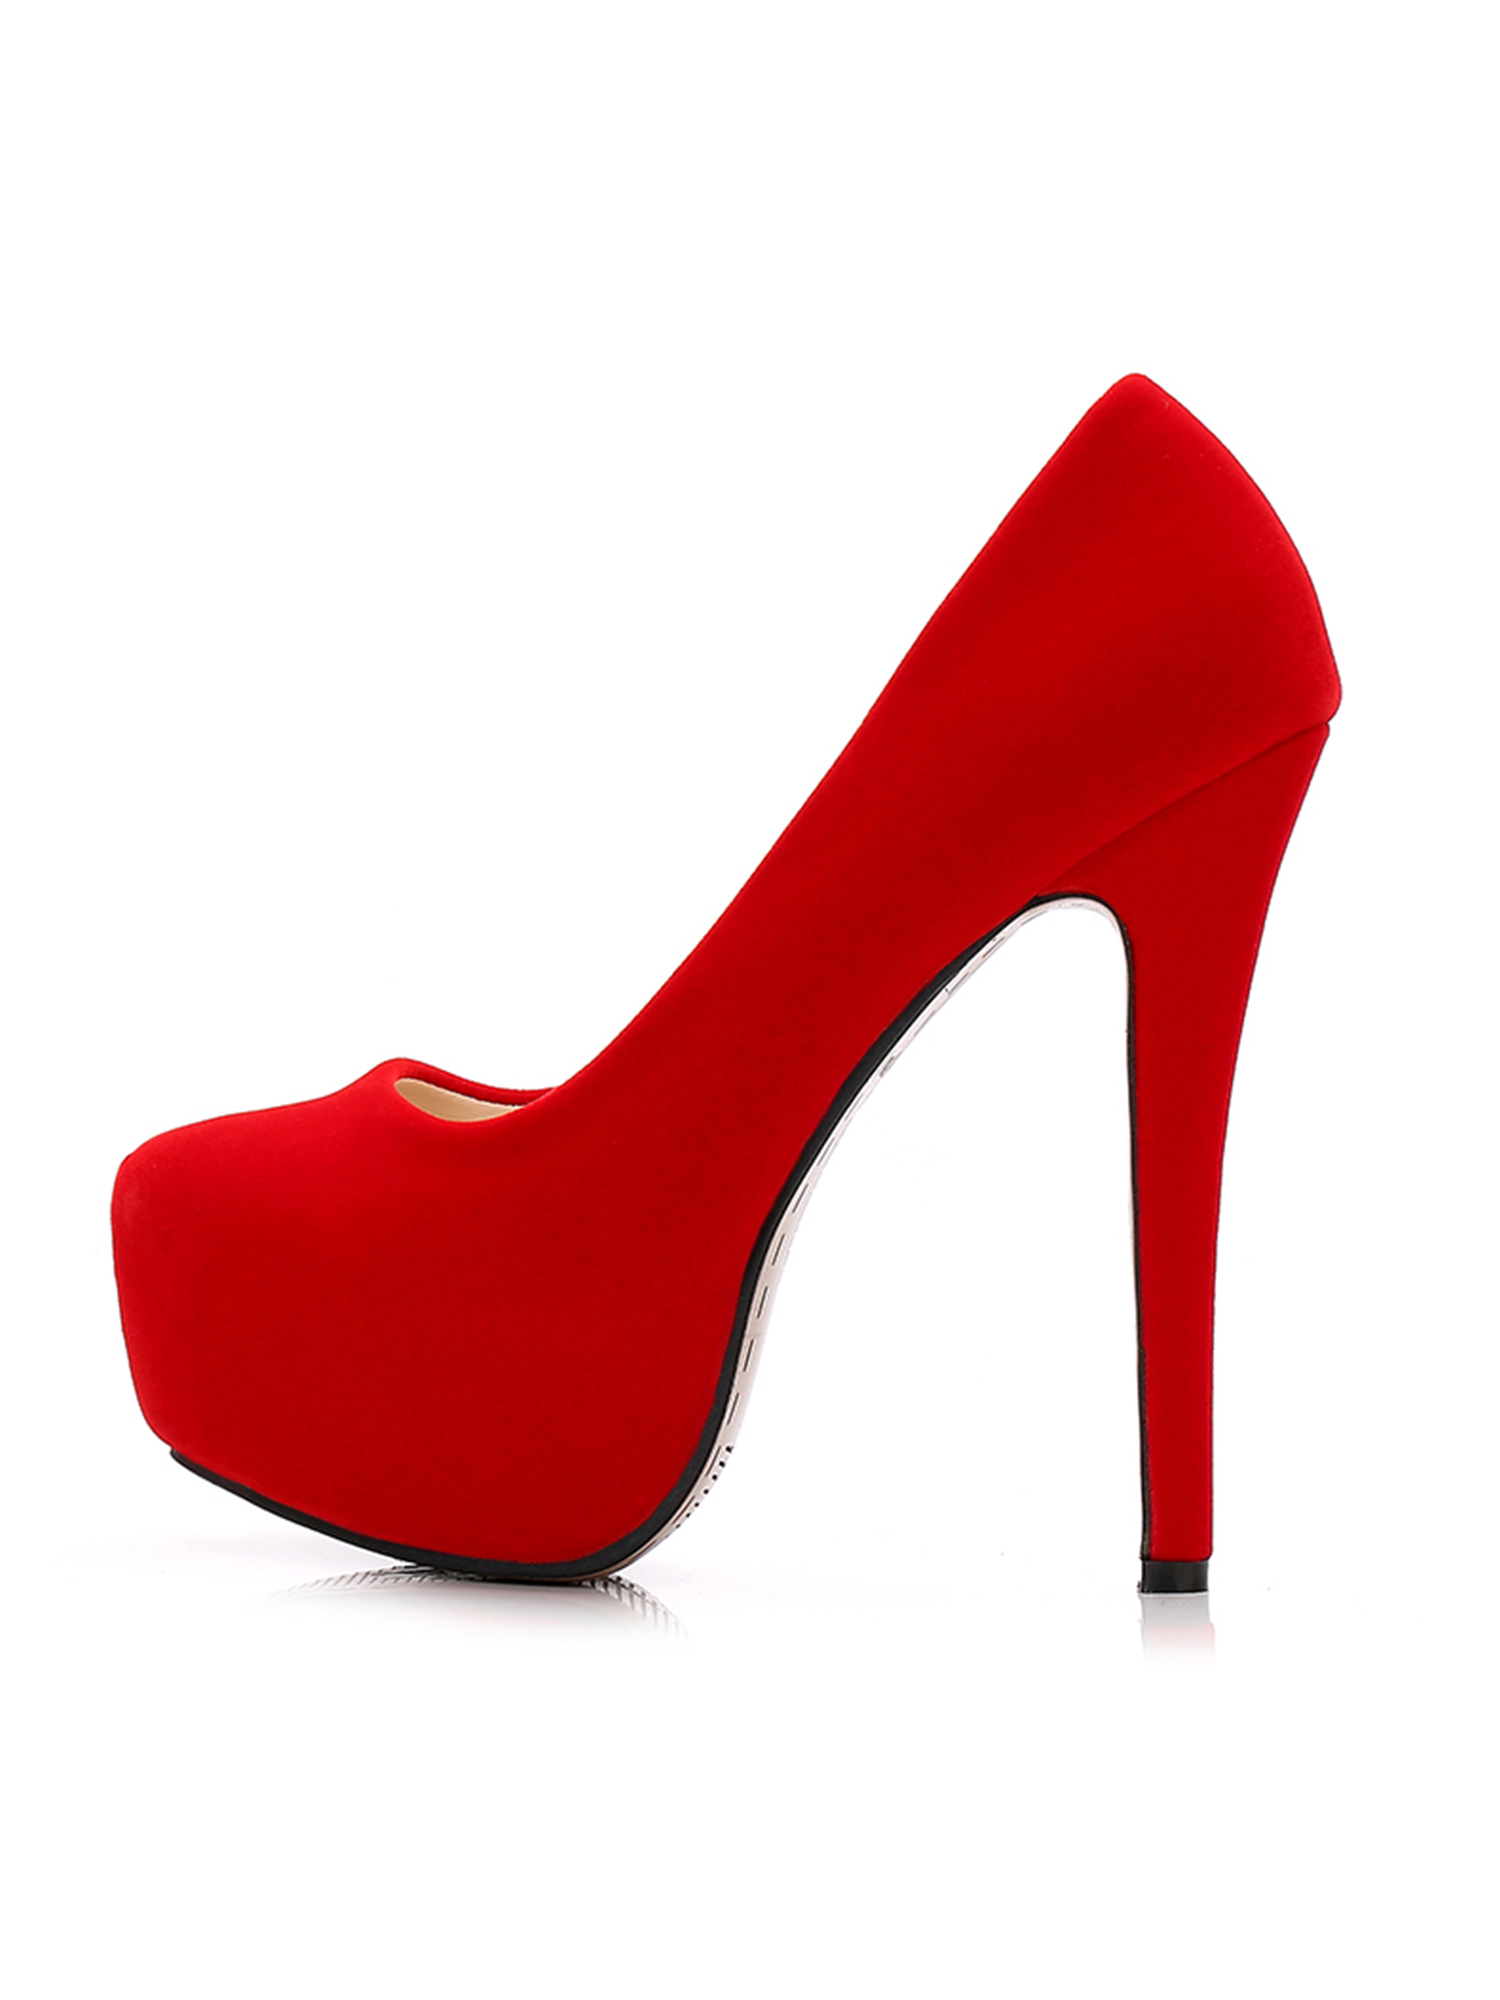 Daeful Women Lightweight High Heel Platform Pump Wedding Stiletto Heels Walking Fashion Dress Shoes Red (14cm) 11 - image 3 of 9